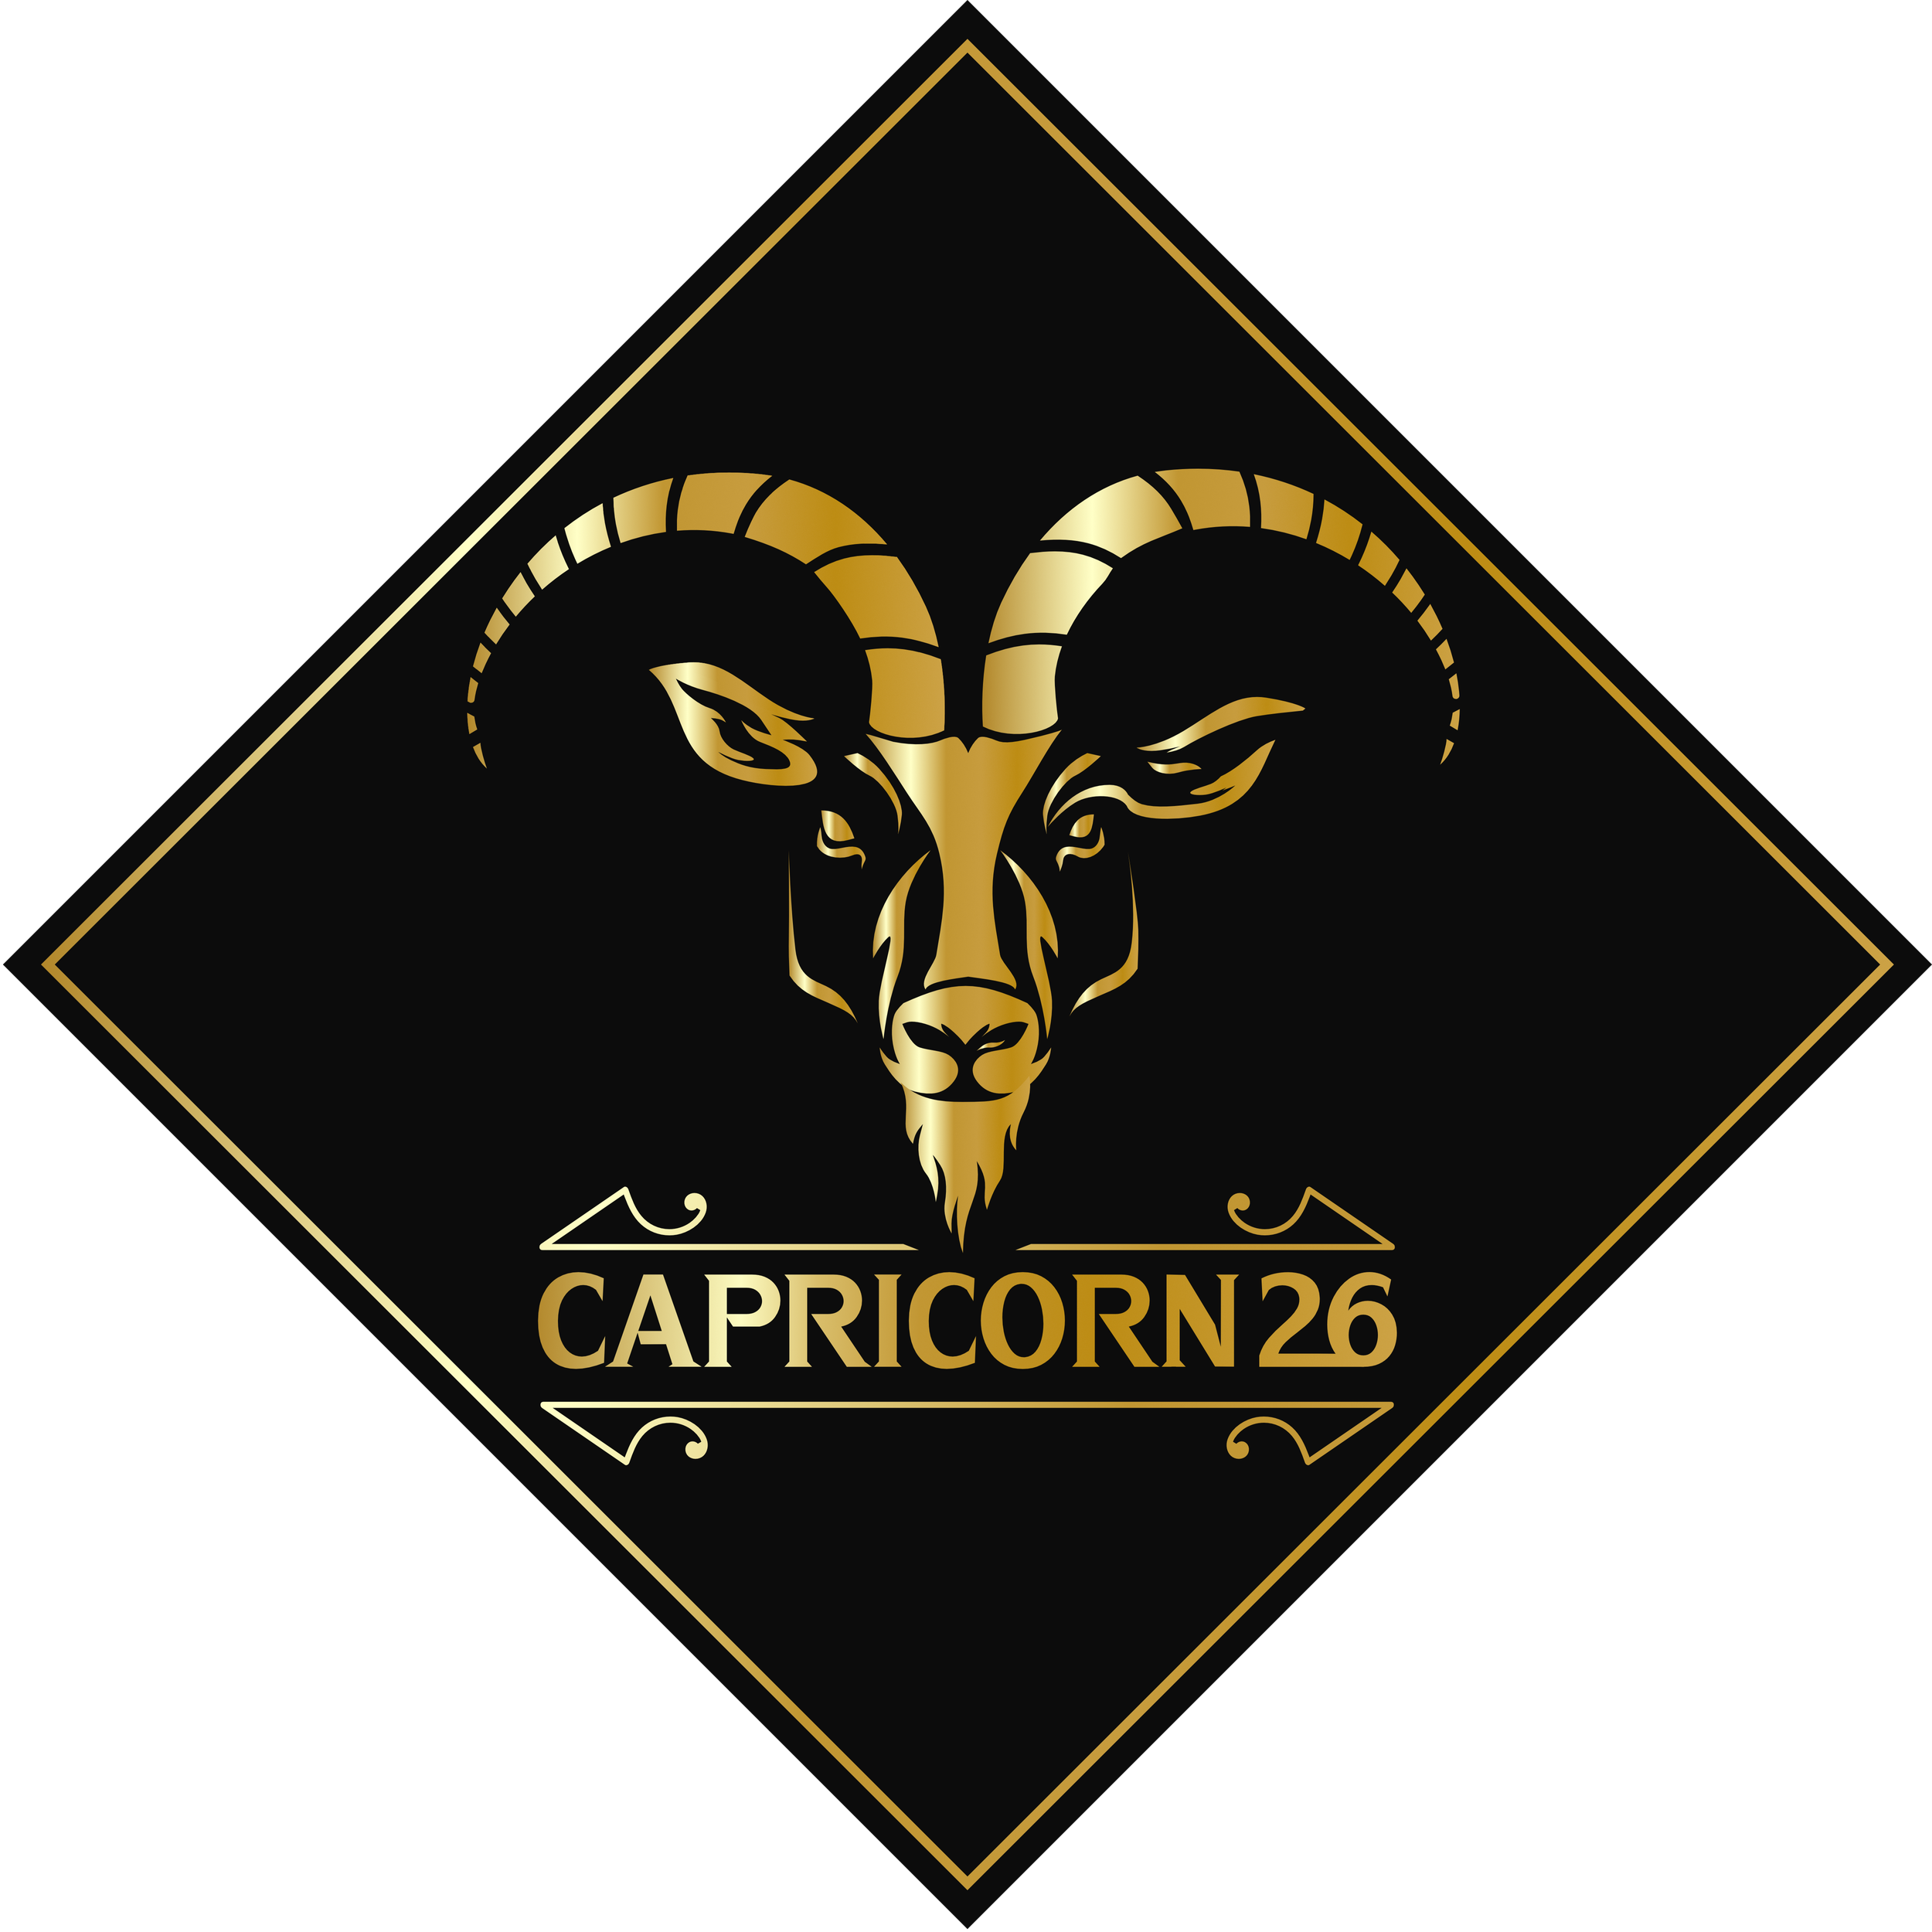 Capricorn26 Logo Labelart edit by NB.png